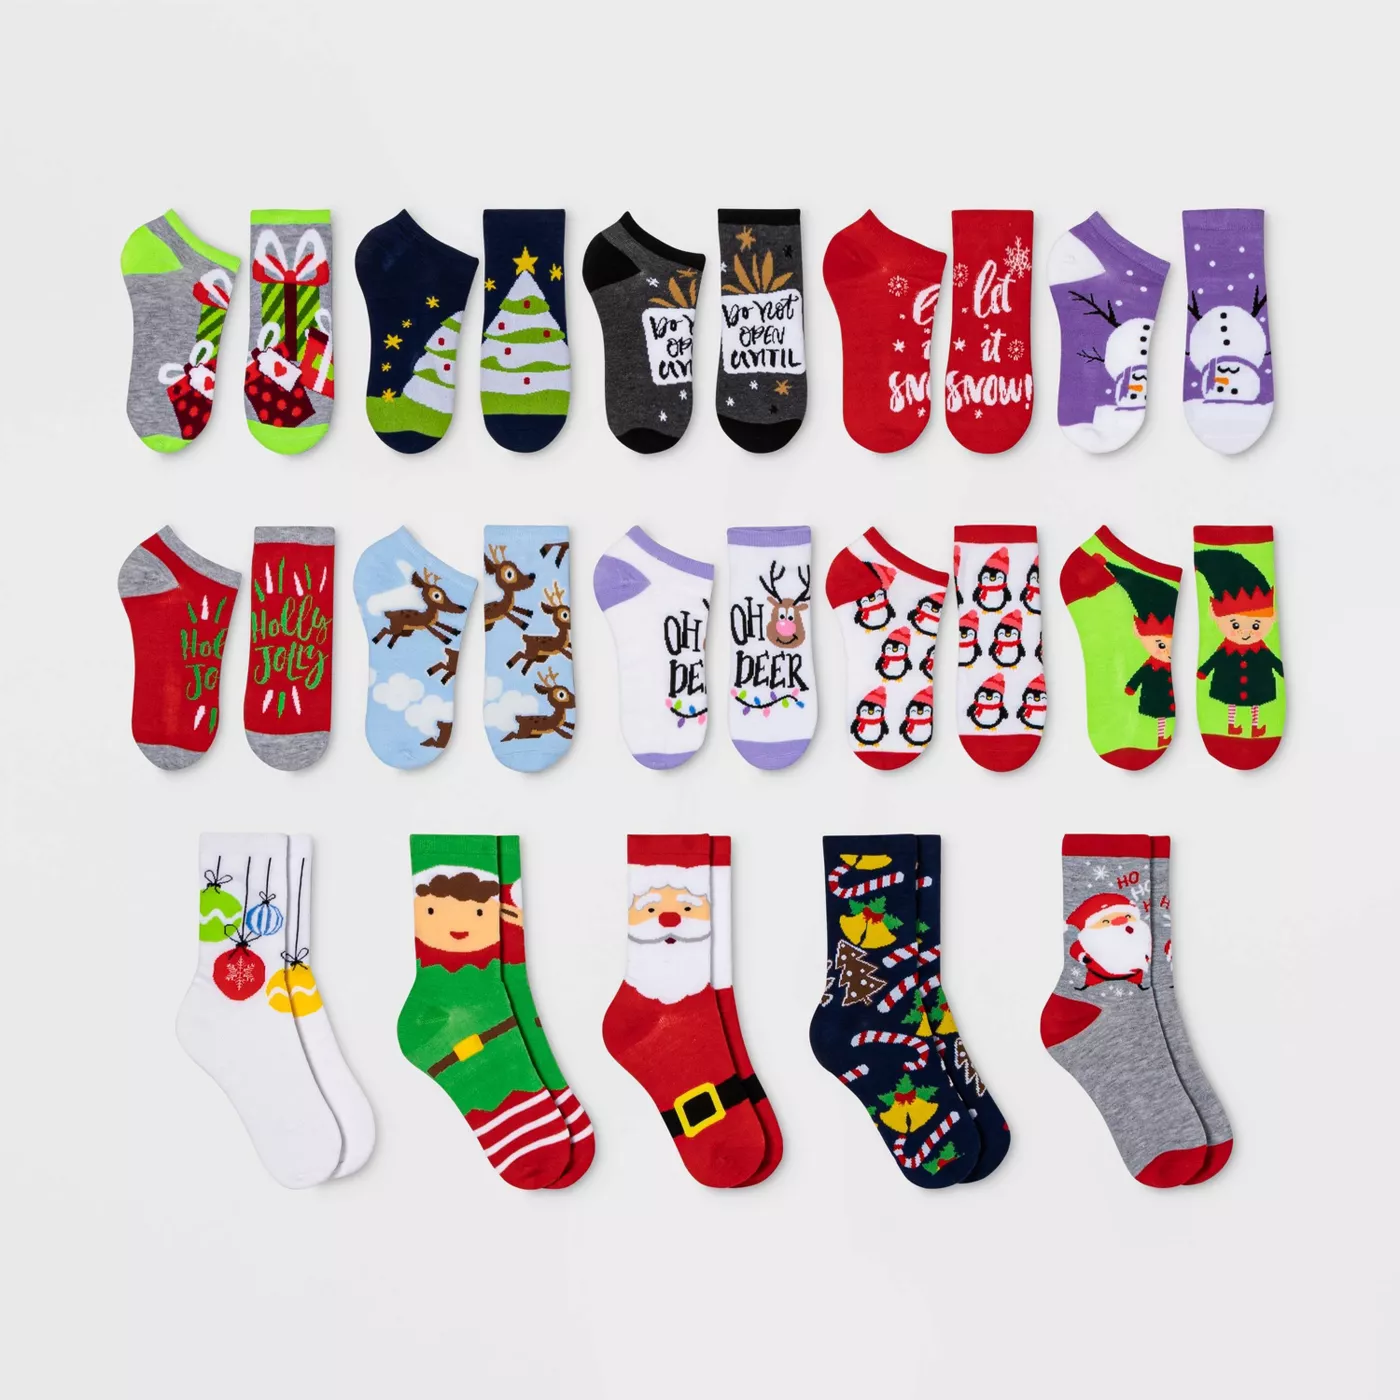 2020 Target Socks Advent Calendars Available Now! - Hello Subscription